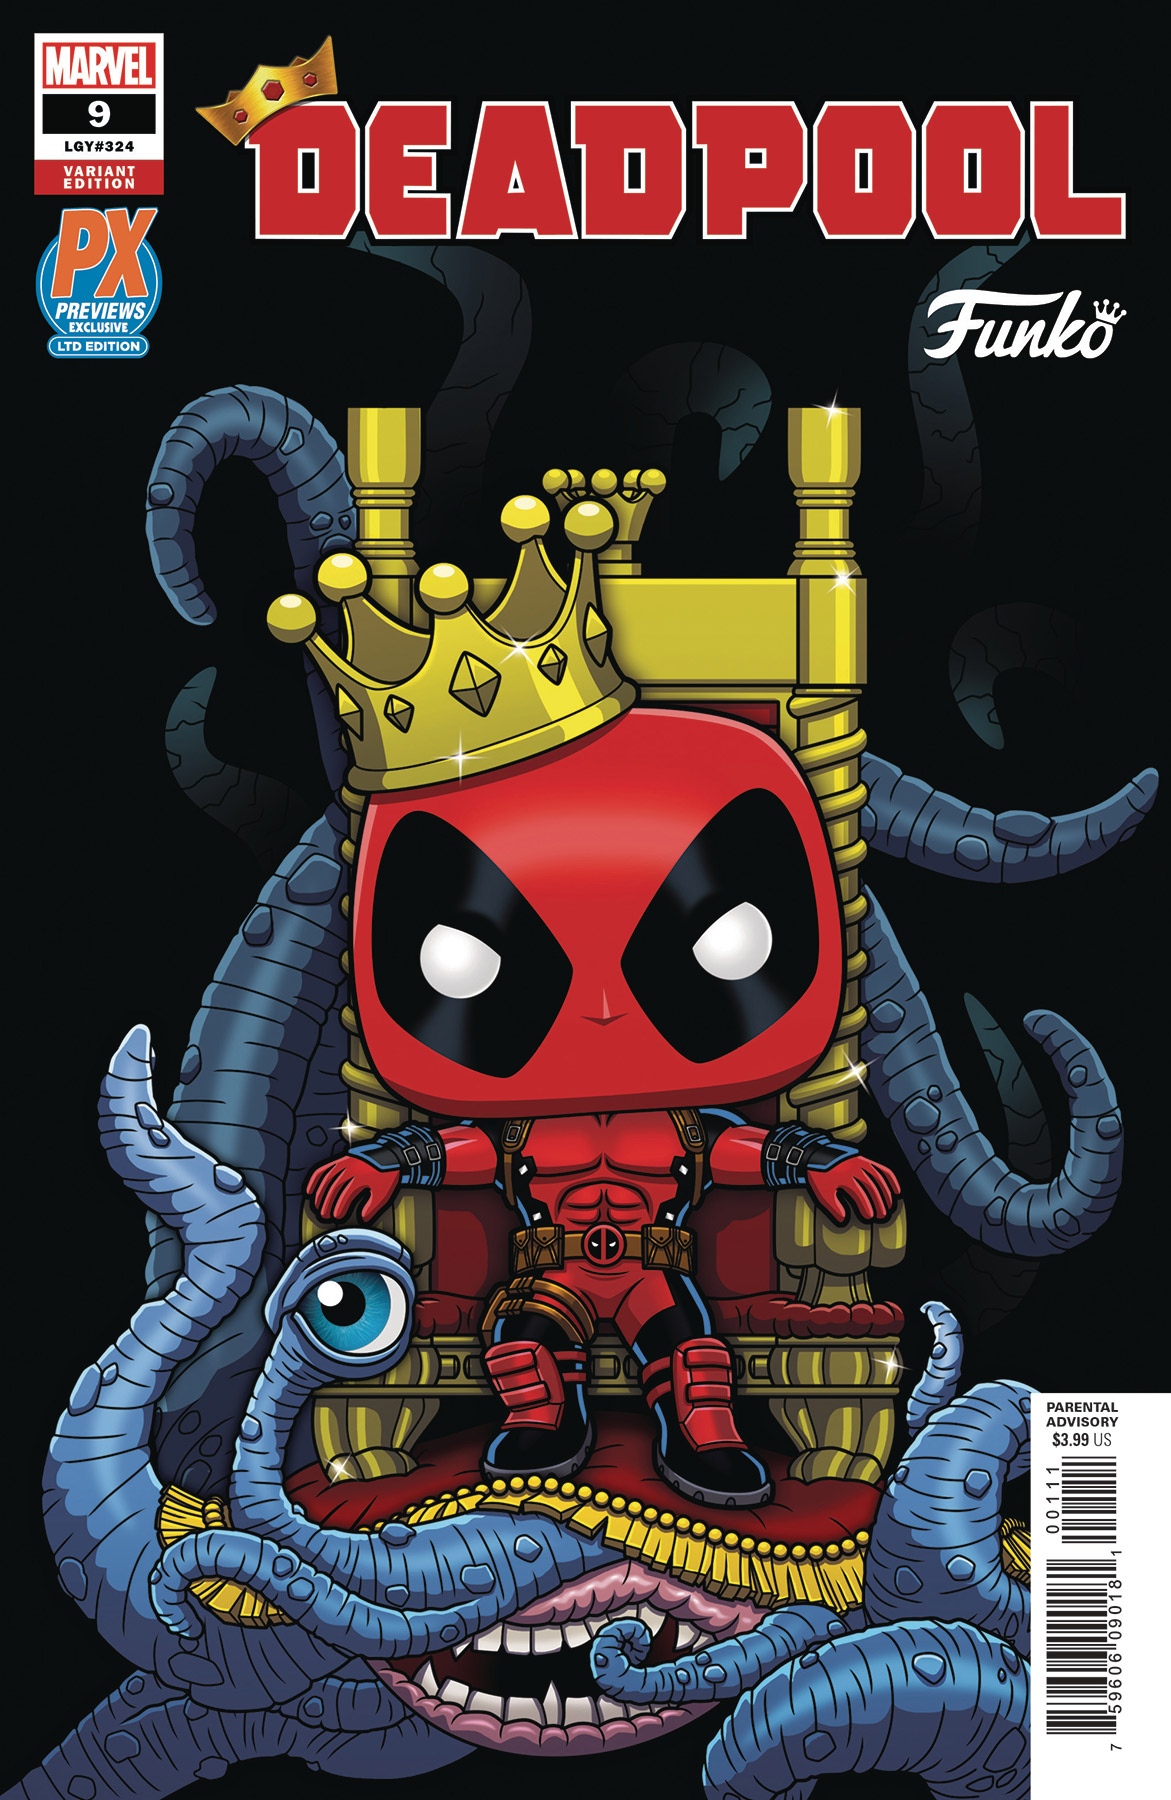 Deadpool funko pop #145 Marvel PX Previews Exclusive